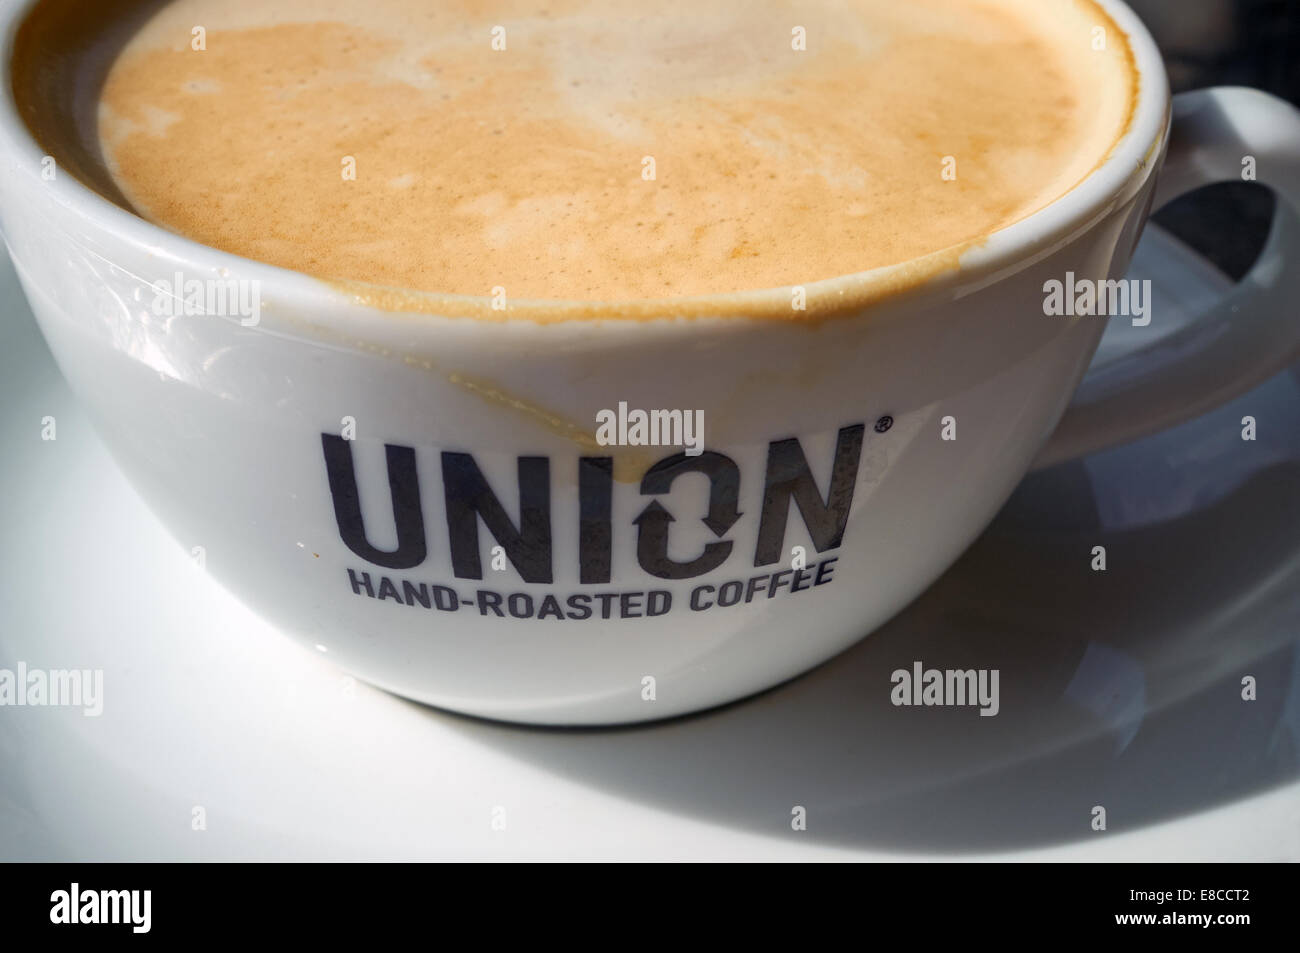 Union hand-roasted coffee Stock Photo